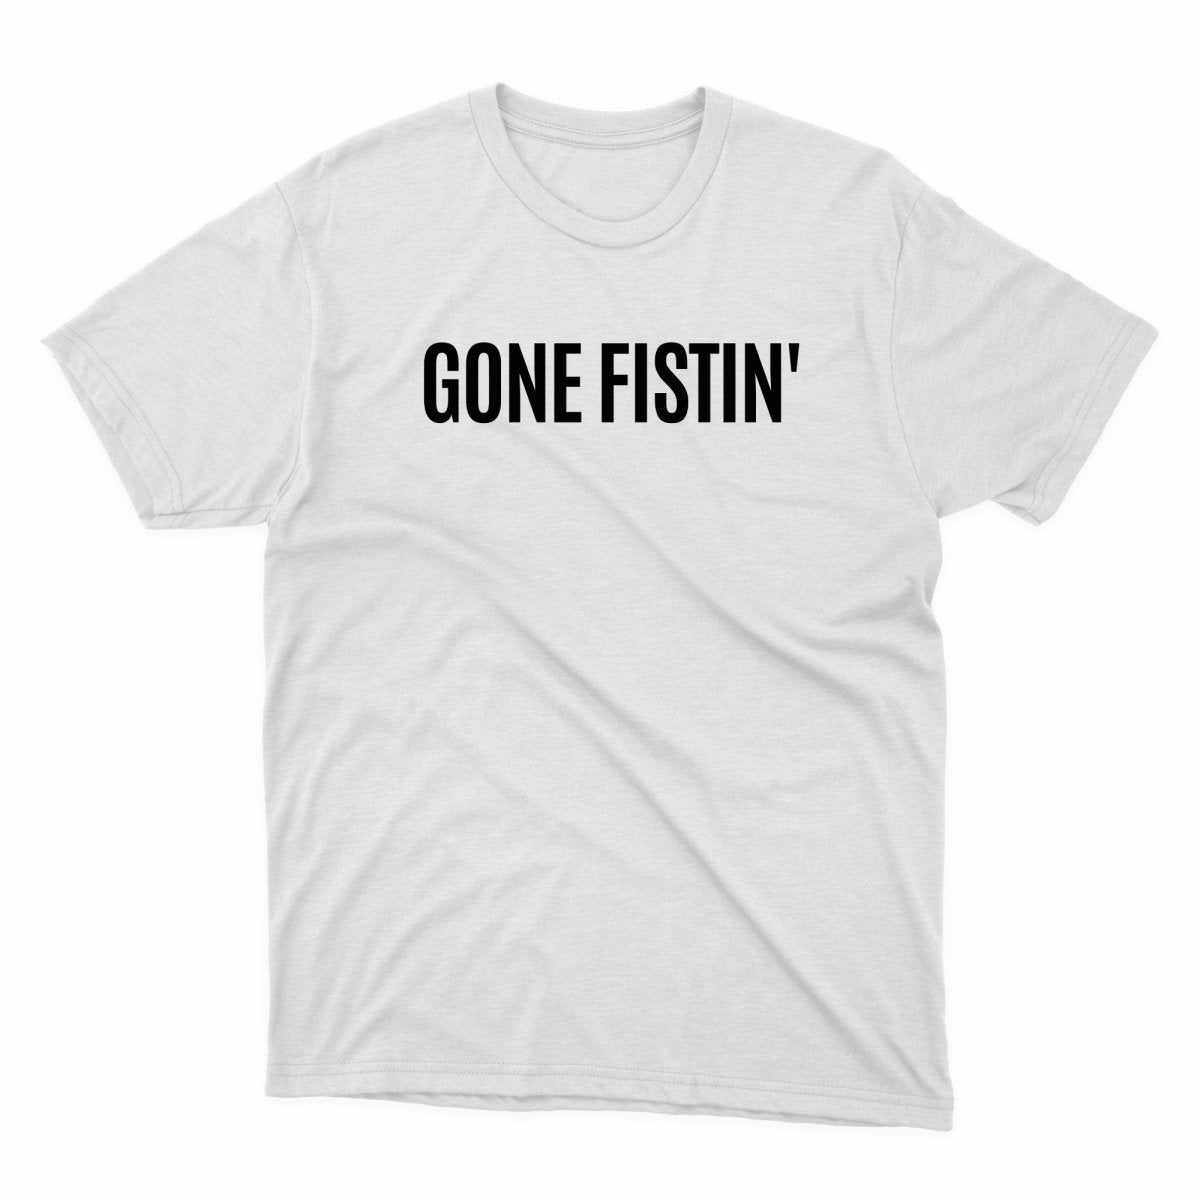 Gone Fistin Shirt - stickerbullGone Fistin ShirtShirtsPrintifystickerbull10784163011985691225WhiteSa white t - shirt that says gone fishin